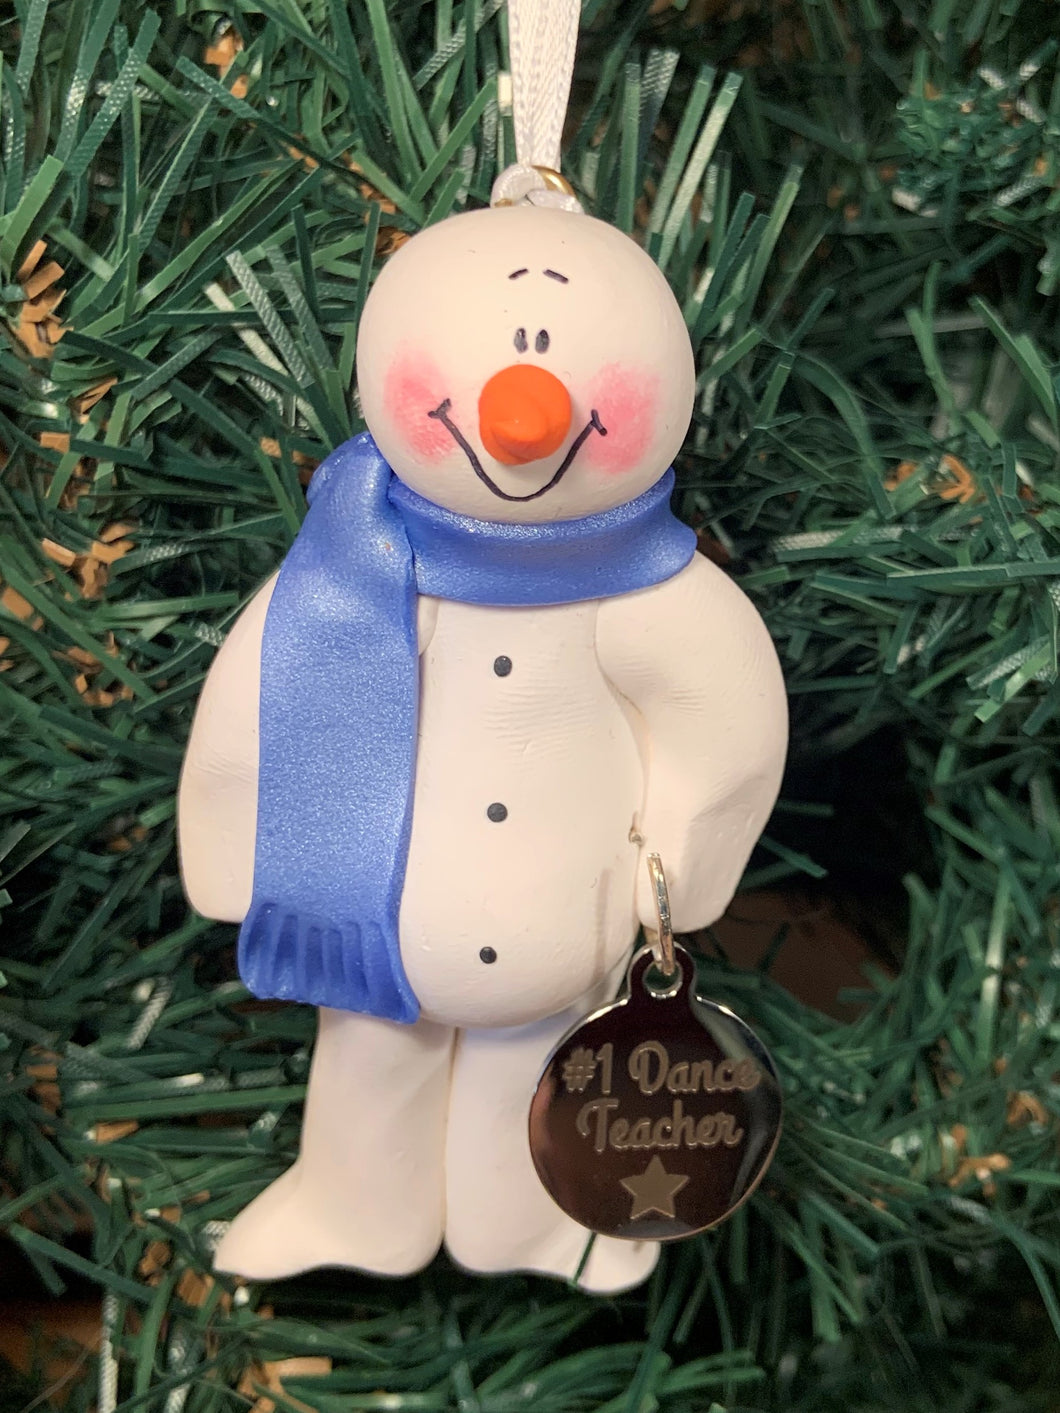 #1 Dance Teacher Snowman Tree Ornament